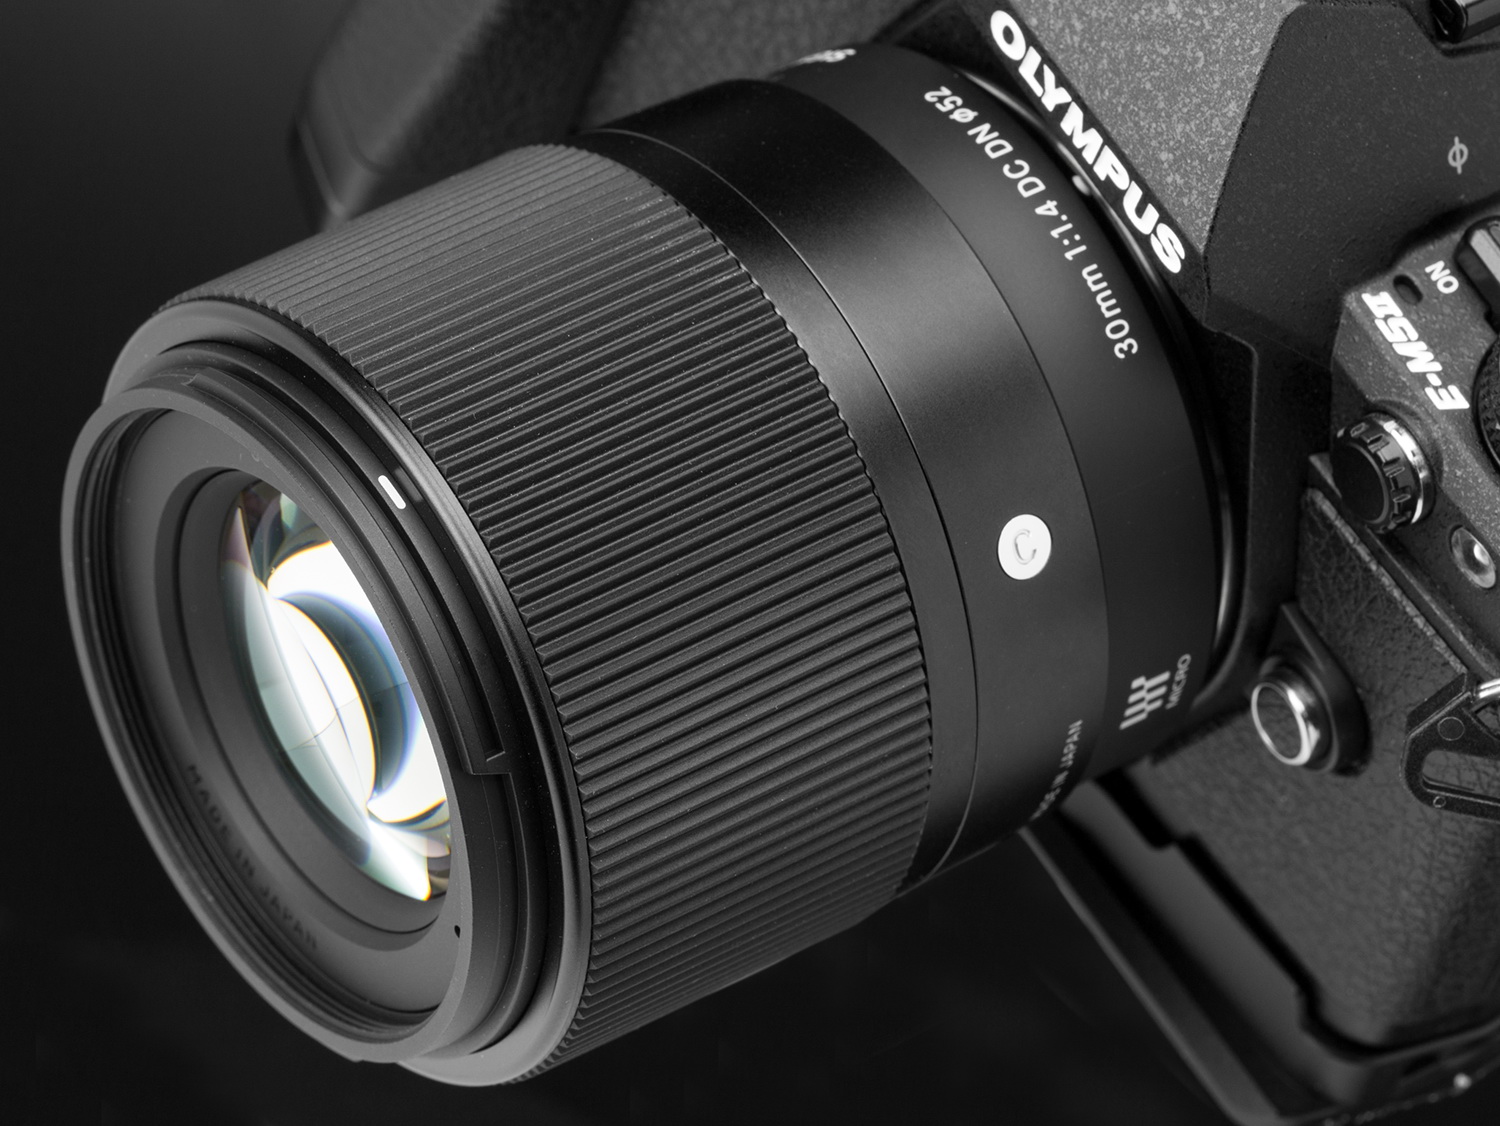 SIGMA 30mm F1.4 DC DN 単焦点レンズ